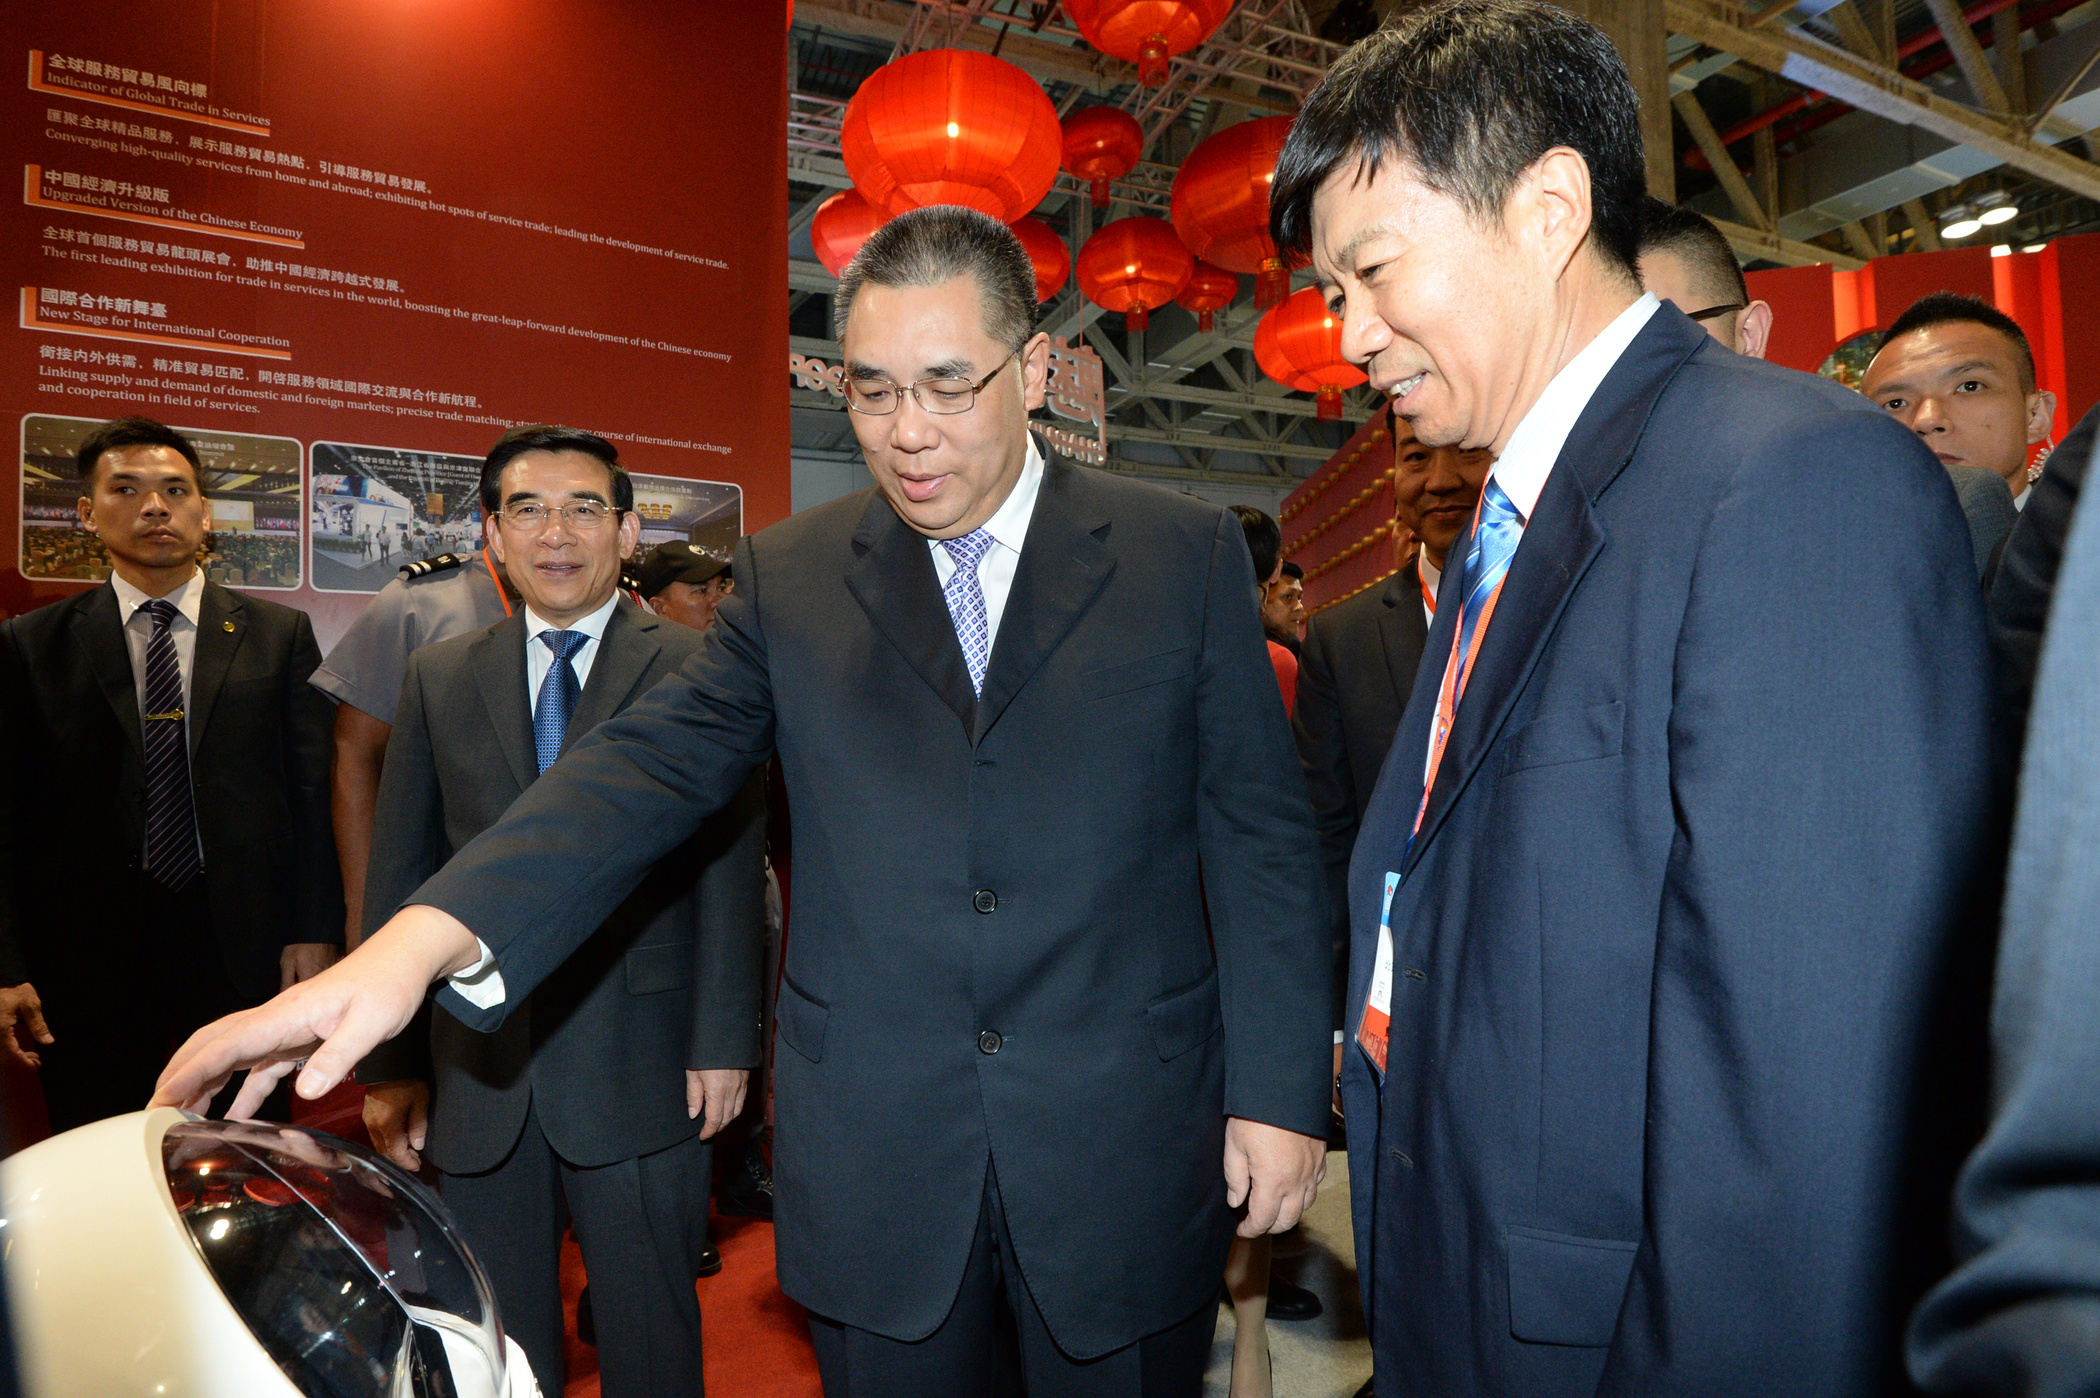 Over 50 deals signed at Macau International Fair